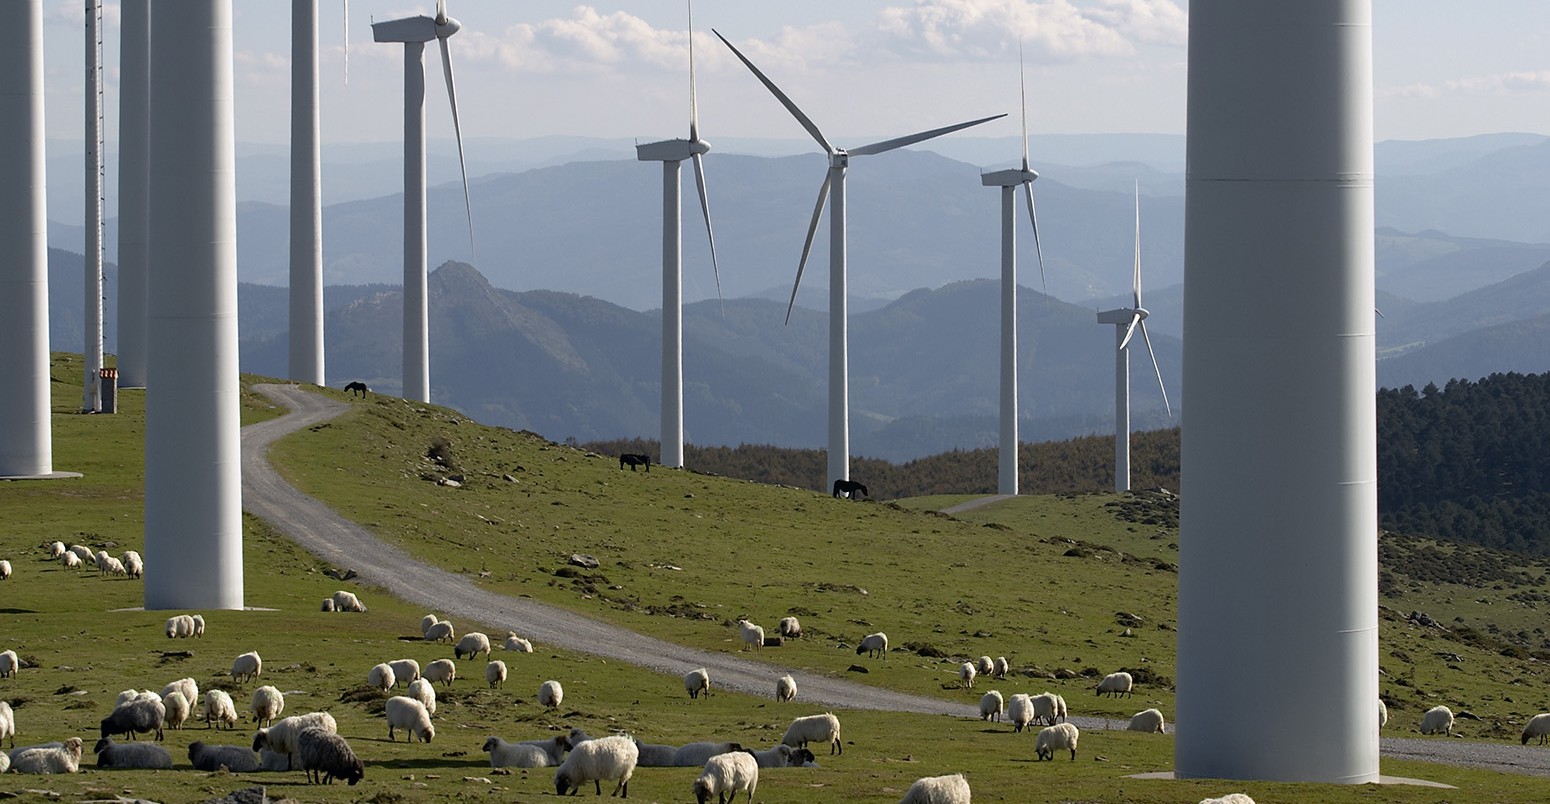 Wind turbines in a sheep field